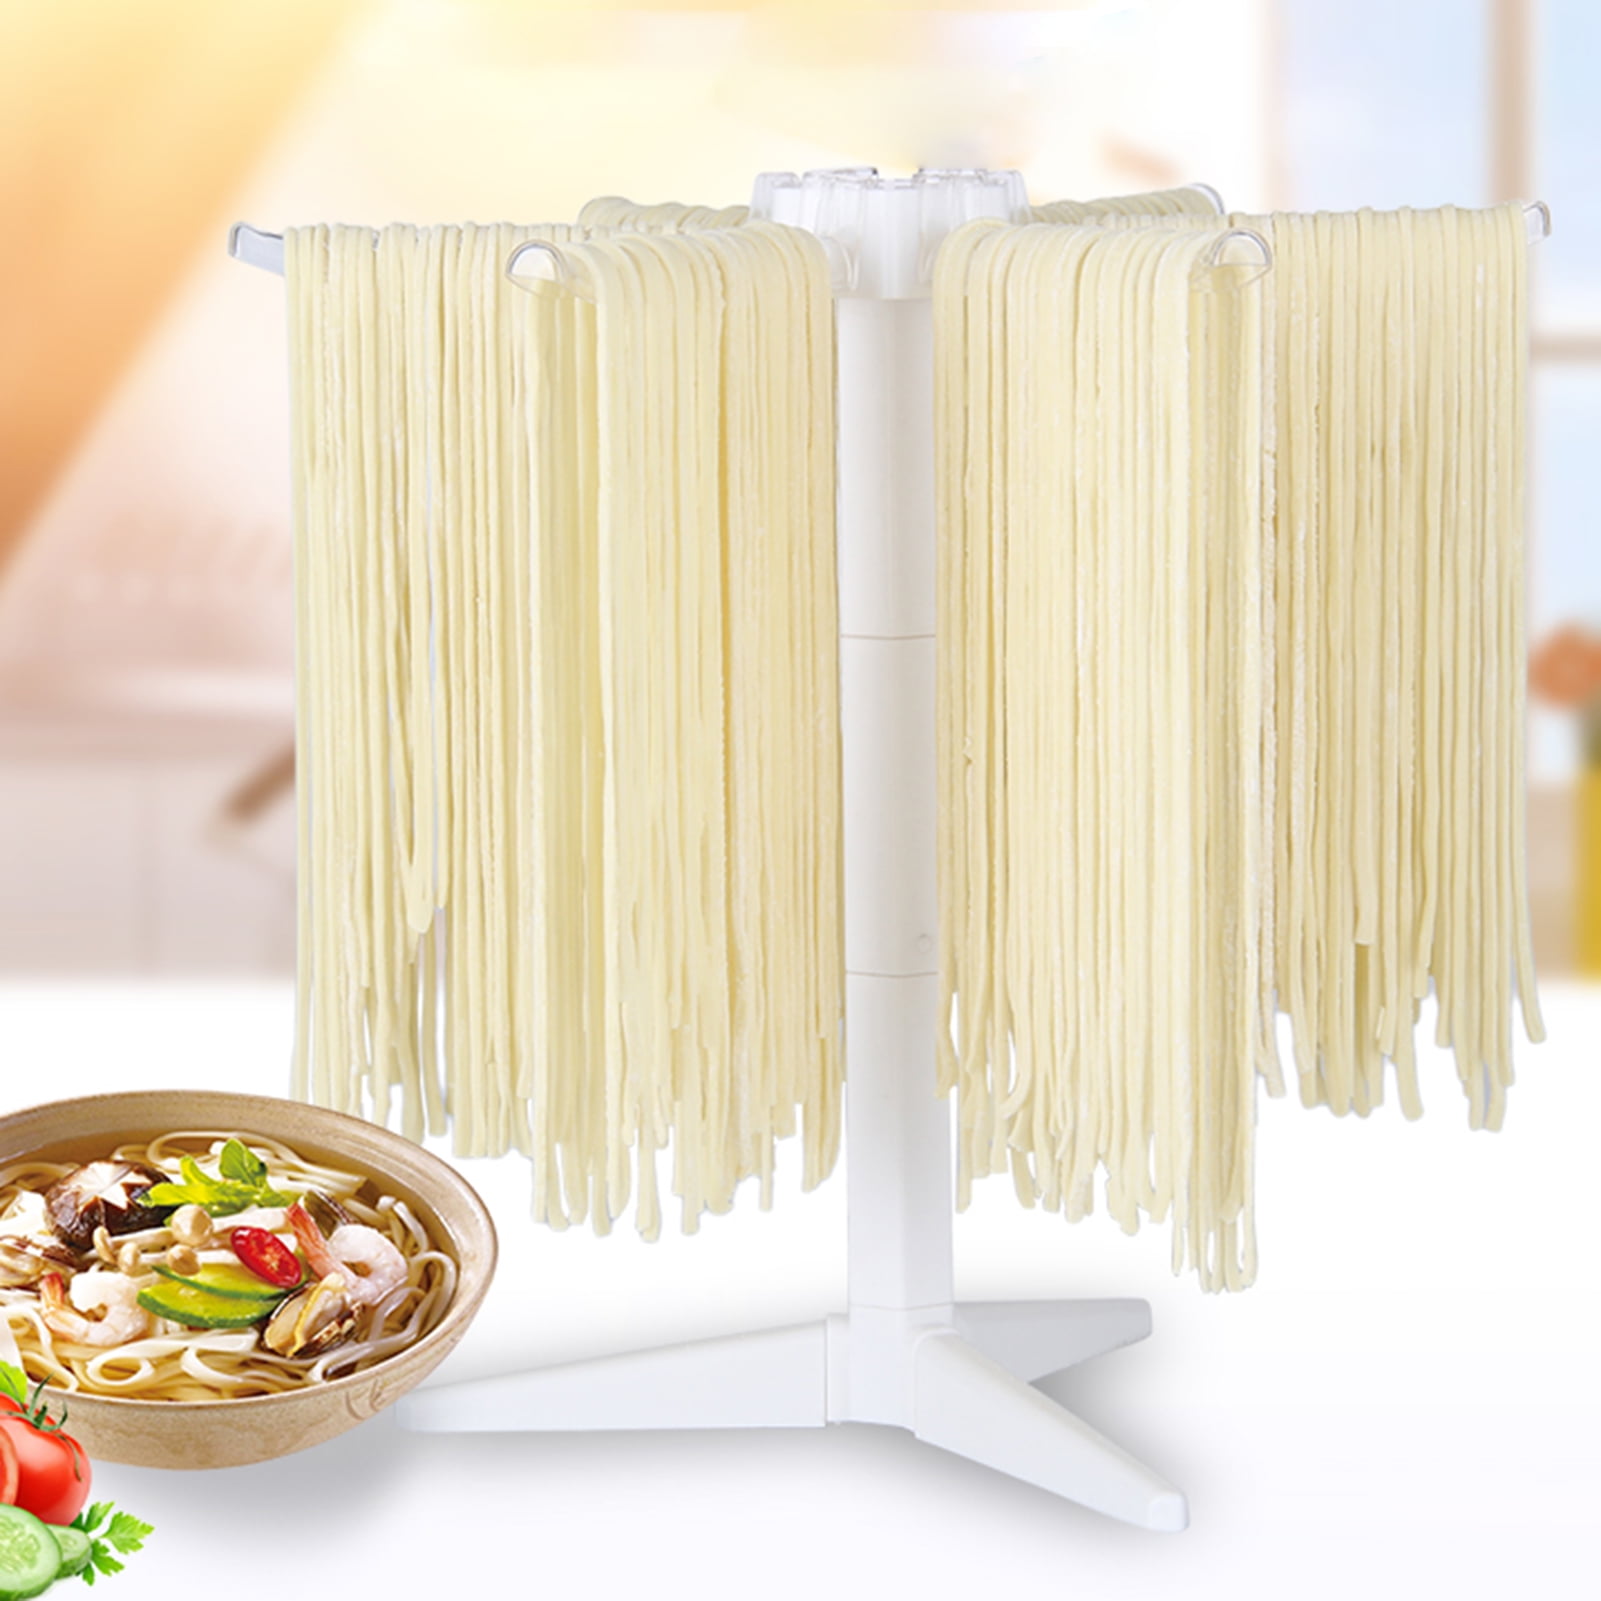 Demountable Pasta Drying Rack,Collapsible Pasta Hanging Rack,Spaghetti Dryer Stand,Portable Noodles Dryer Holder,with Anti-Slip Triangular Base Design 